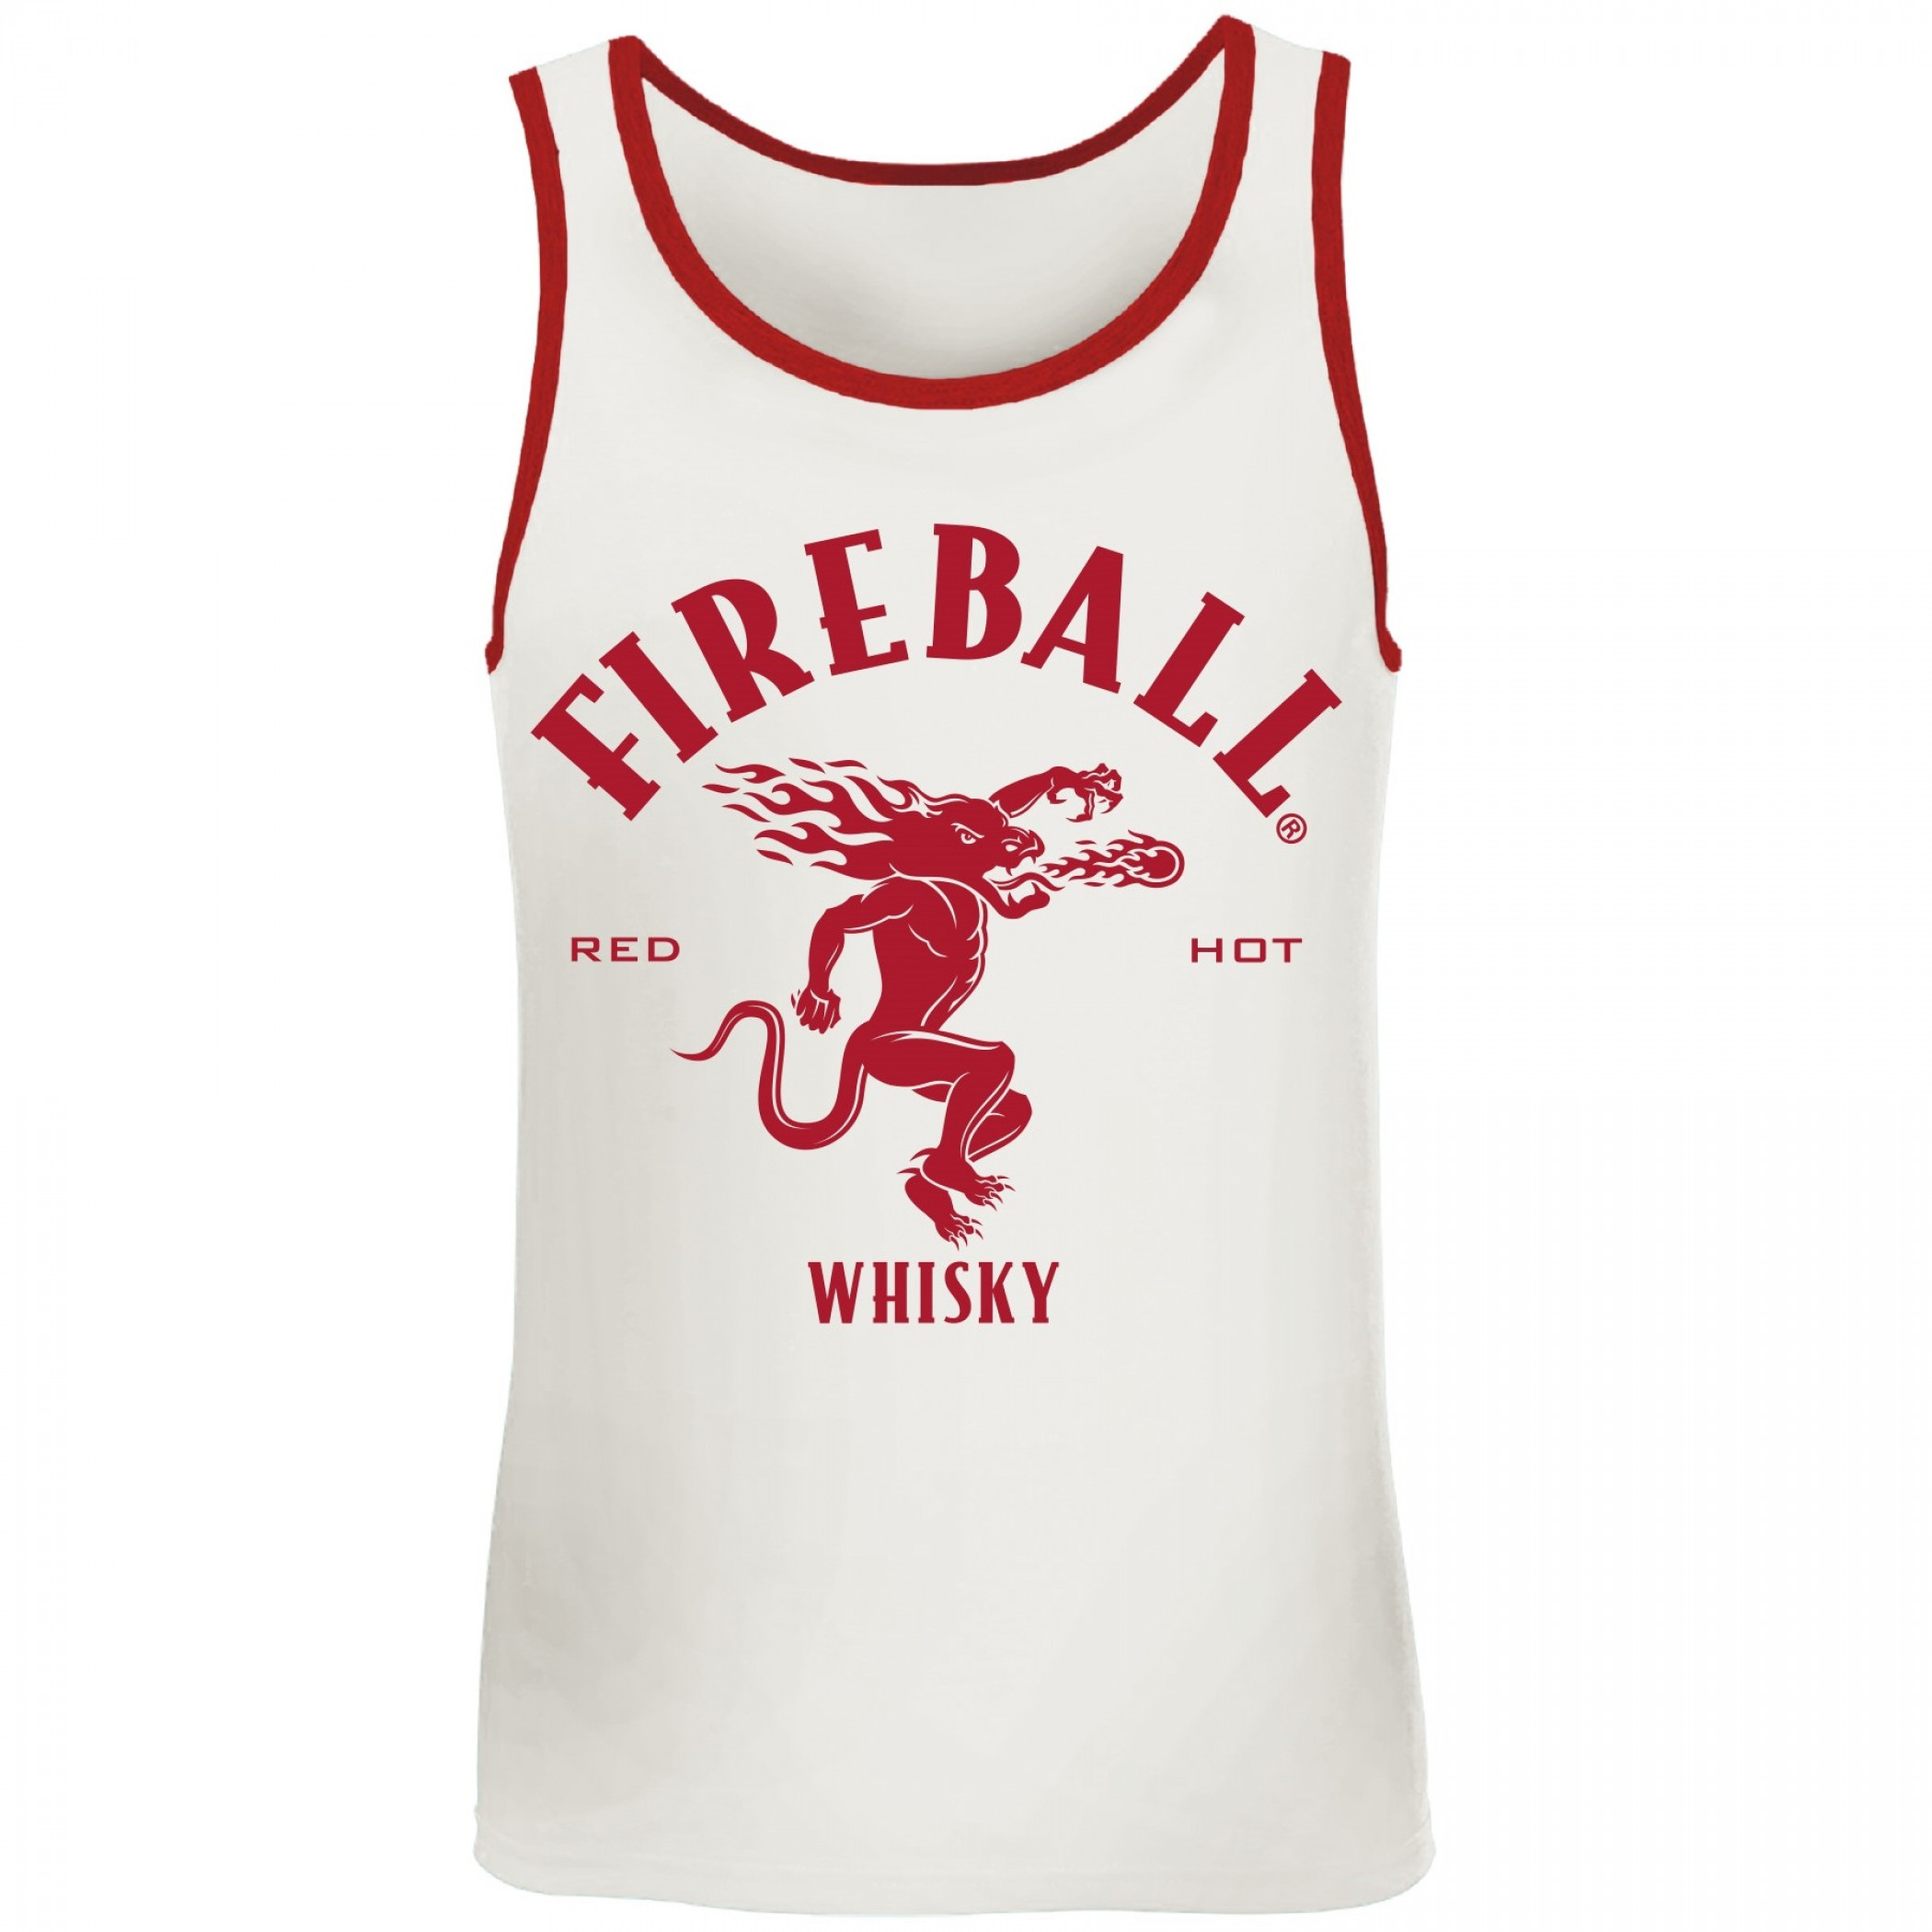 Fireball Whisky Red Trim Tank Top